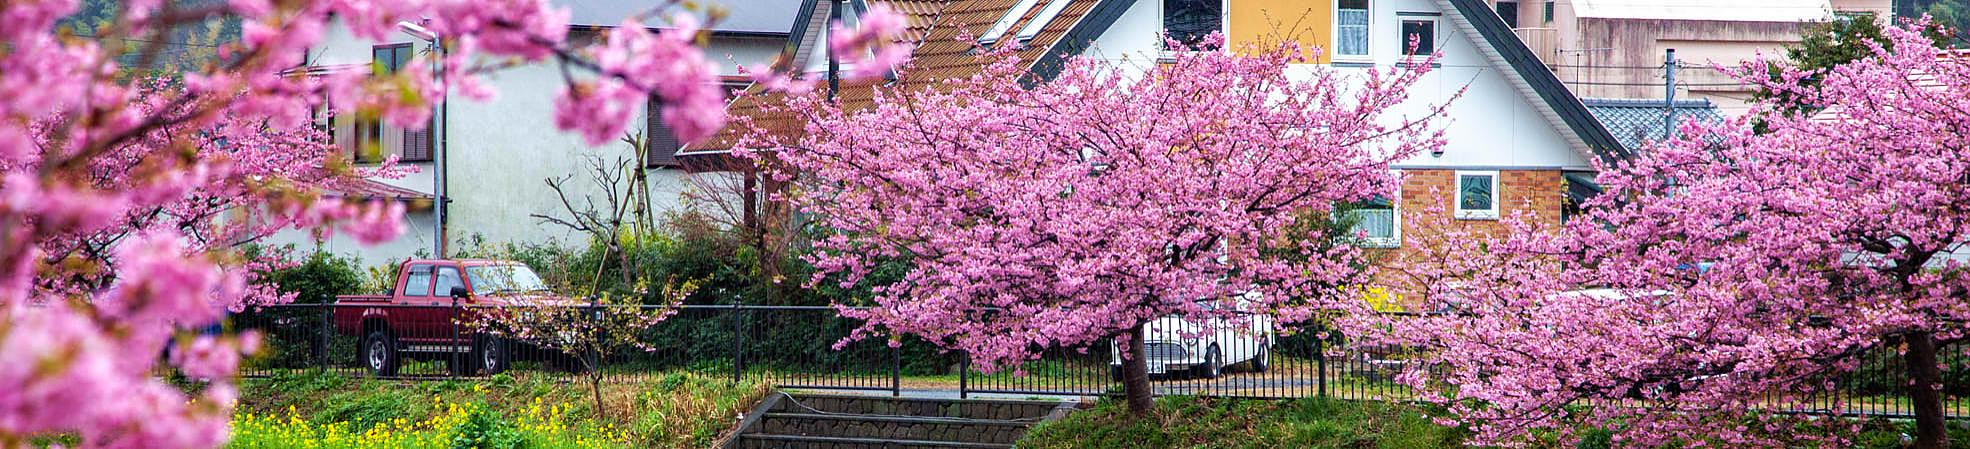 Japan Cherry Blossom Season Tour